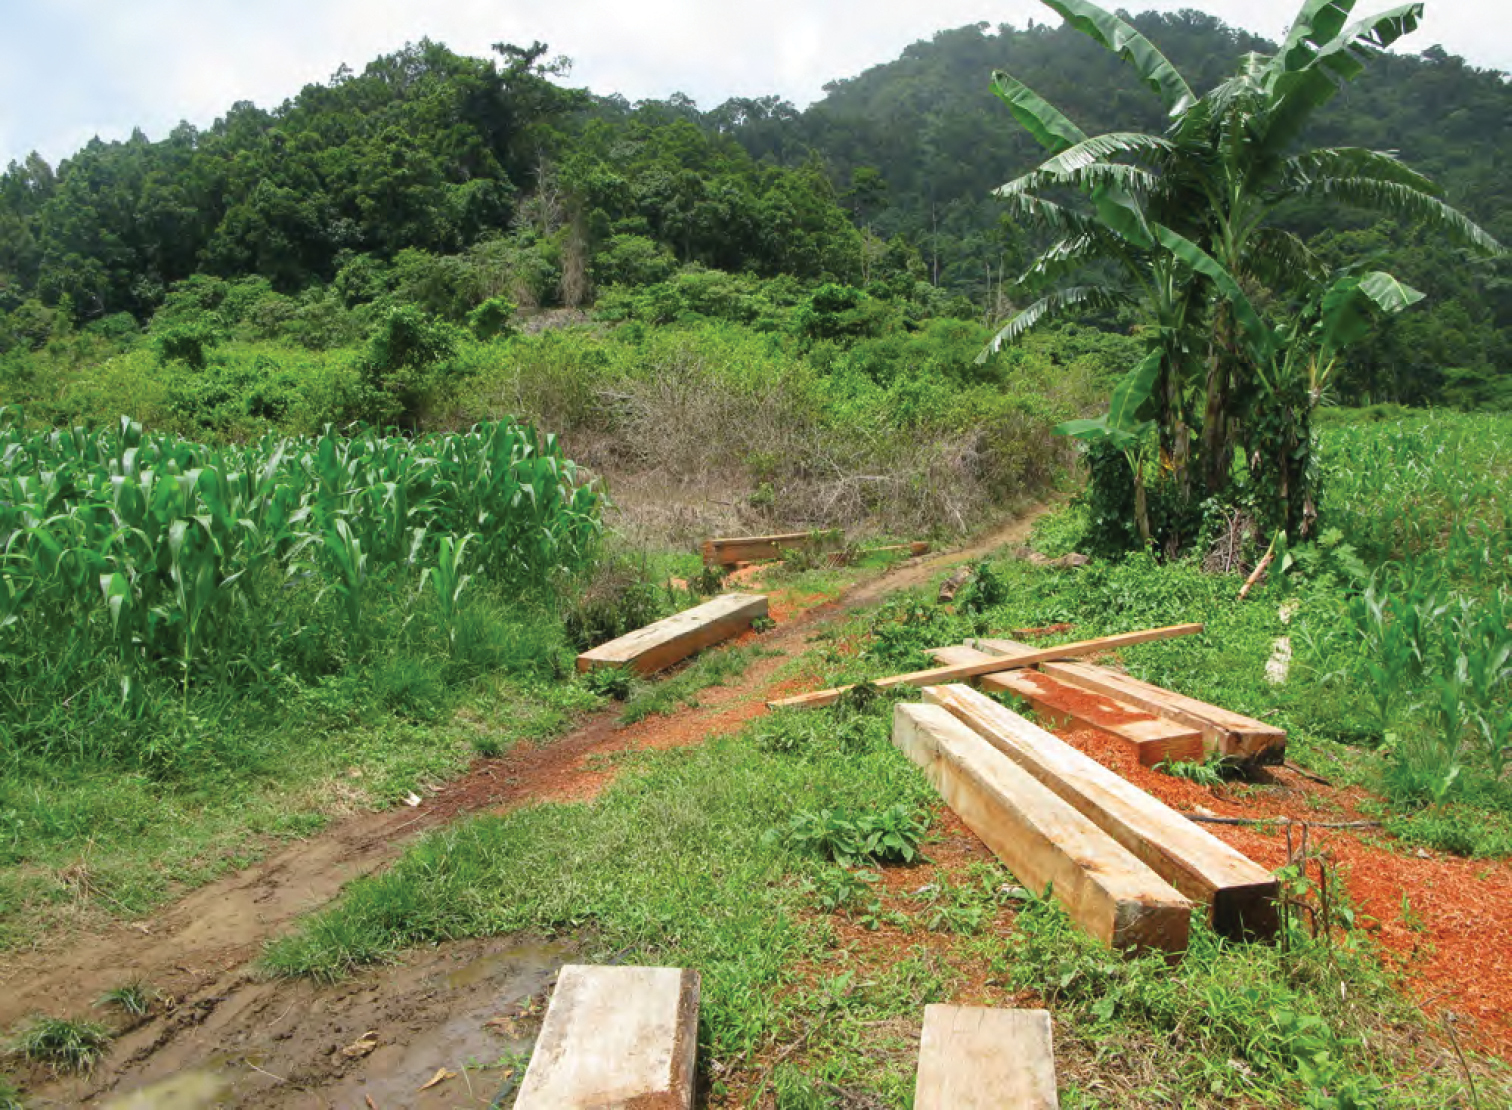 llegal logging in the Philippines. Photo by Brown R, Siler C, Oliveros C, Welton L, Rock A, Swab J, Van Weerd M, van Beijnen J, Rodriguez D, Jose E, Diesmos A/Wikimedia Commons